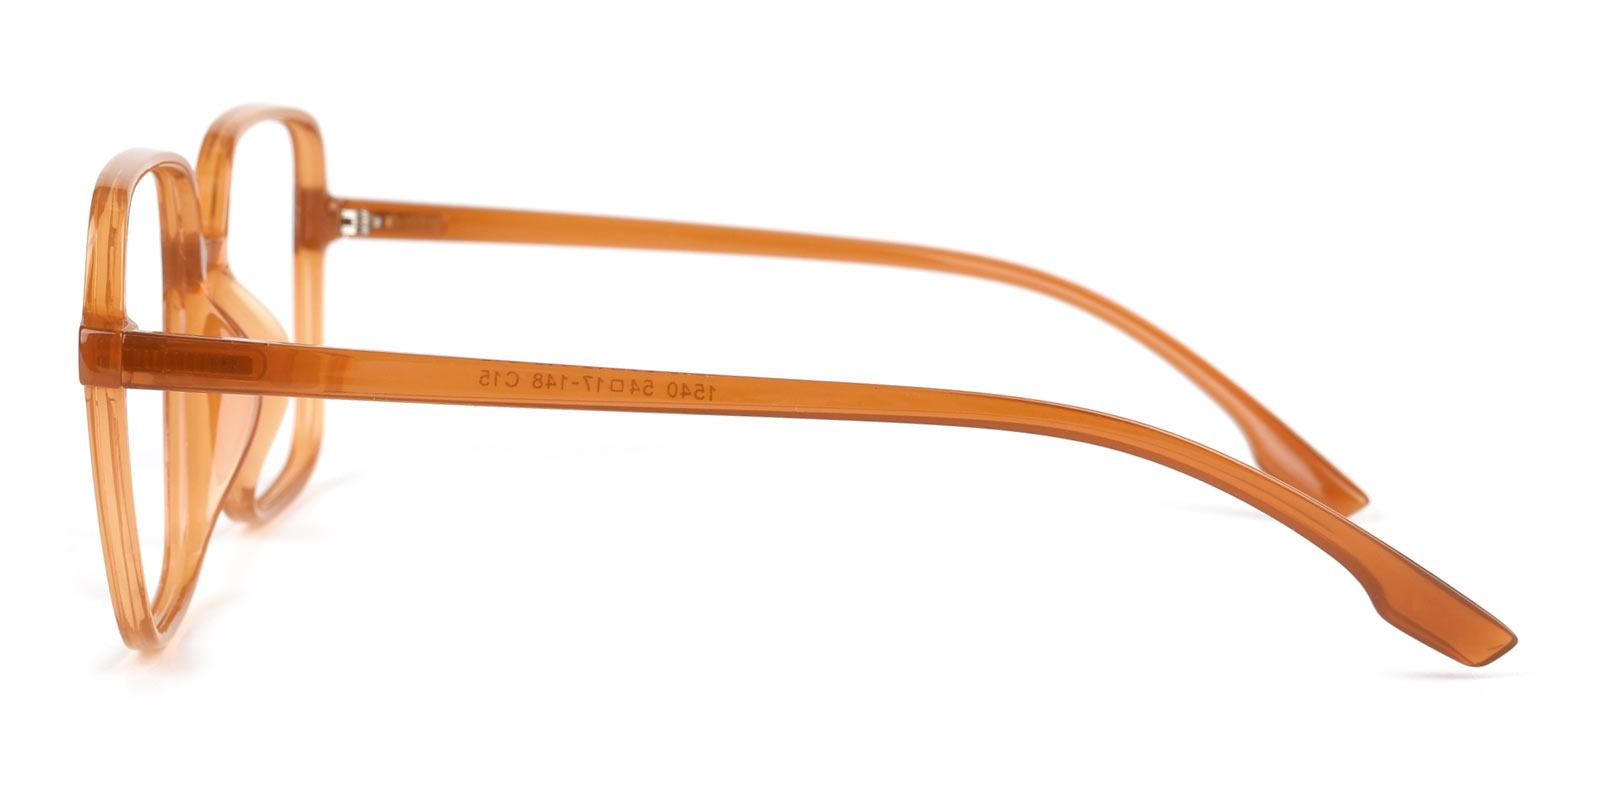 Bonny-Orange-Square-TR-Eyeglasses-detail